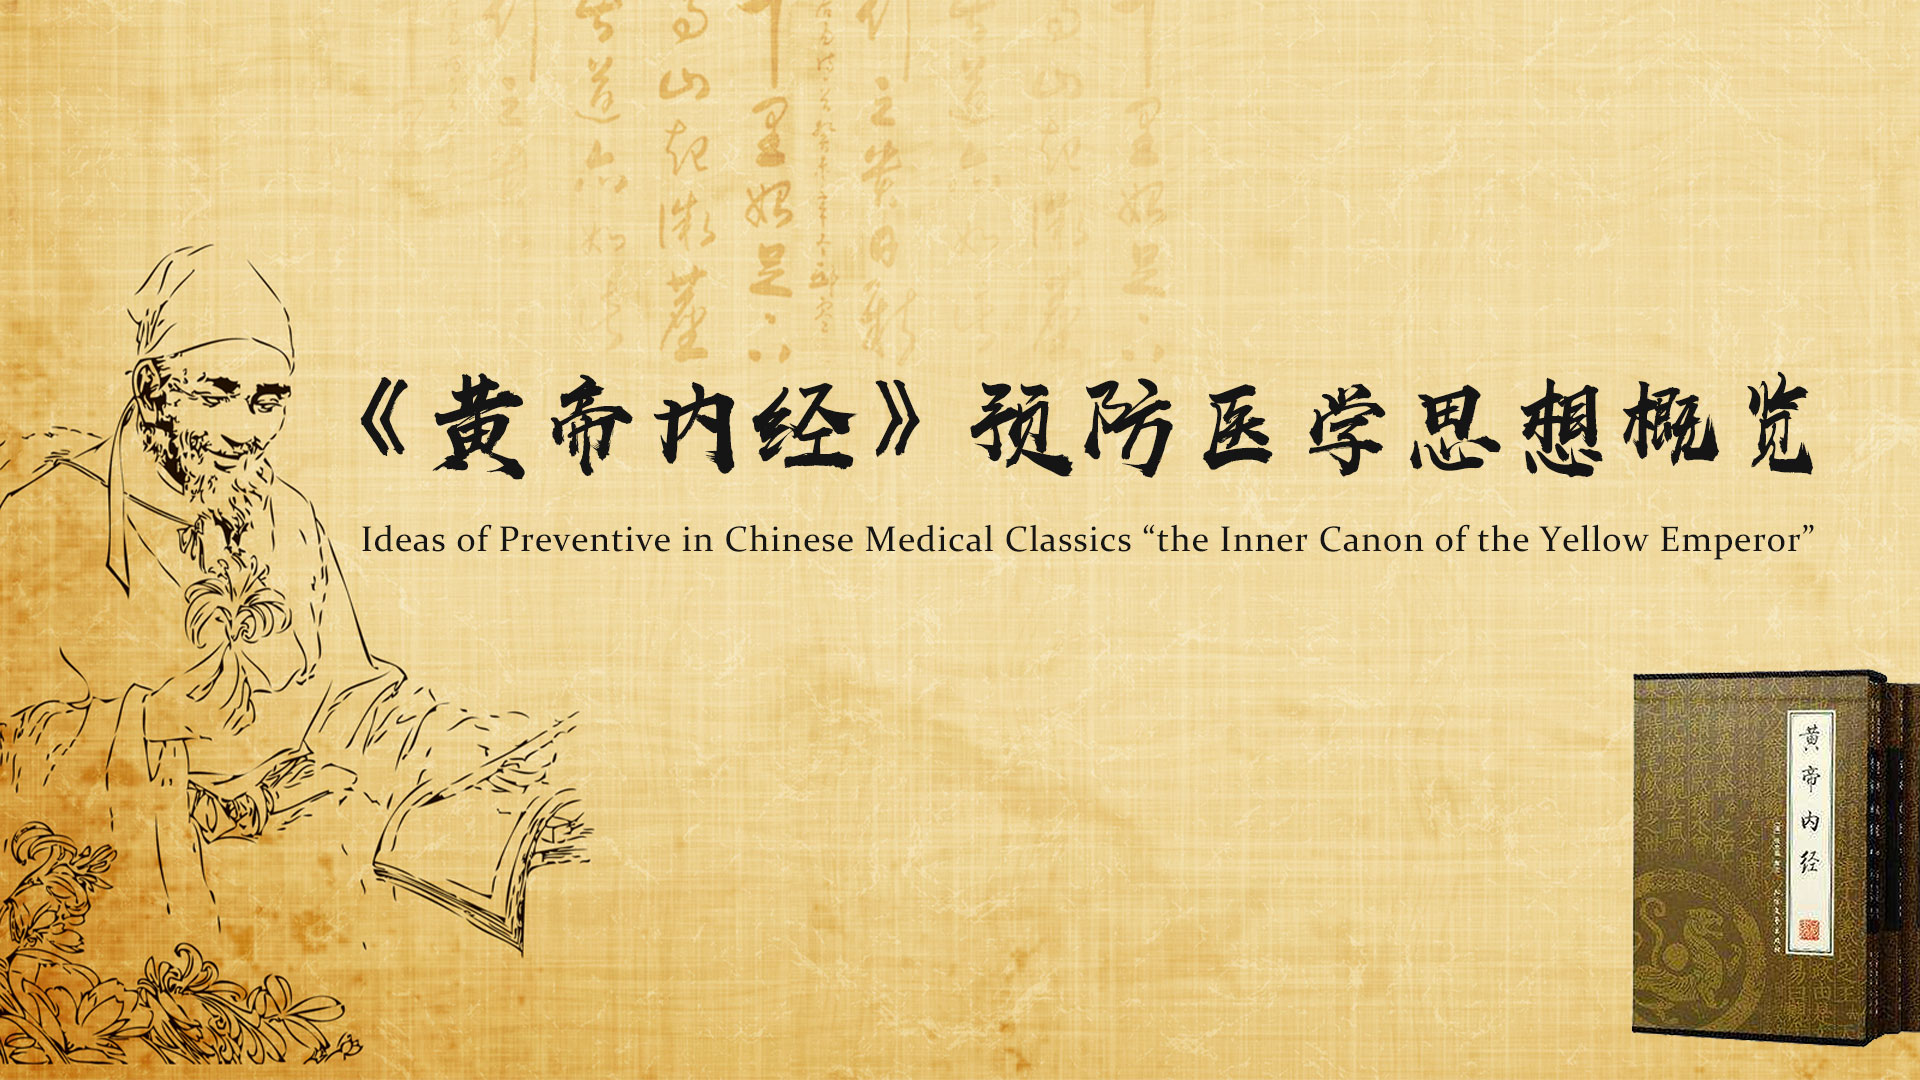 Preventive medicine ideas in Chinese medical classics “Inner Canon of the Yellow Emperor”